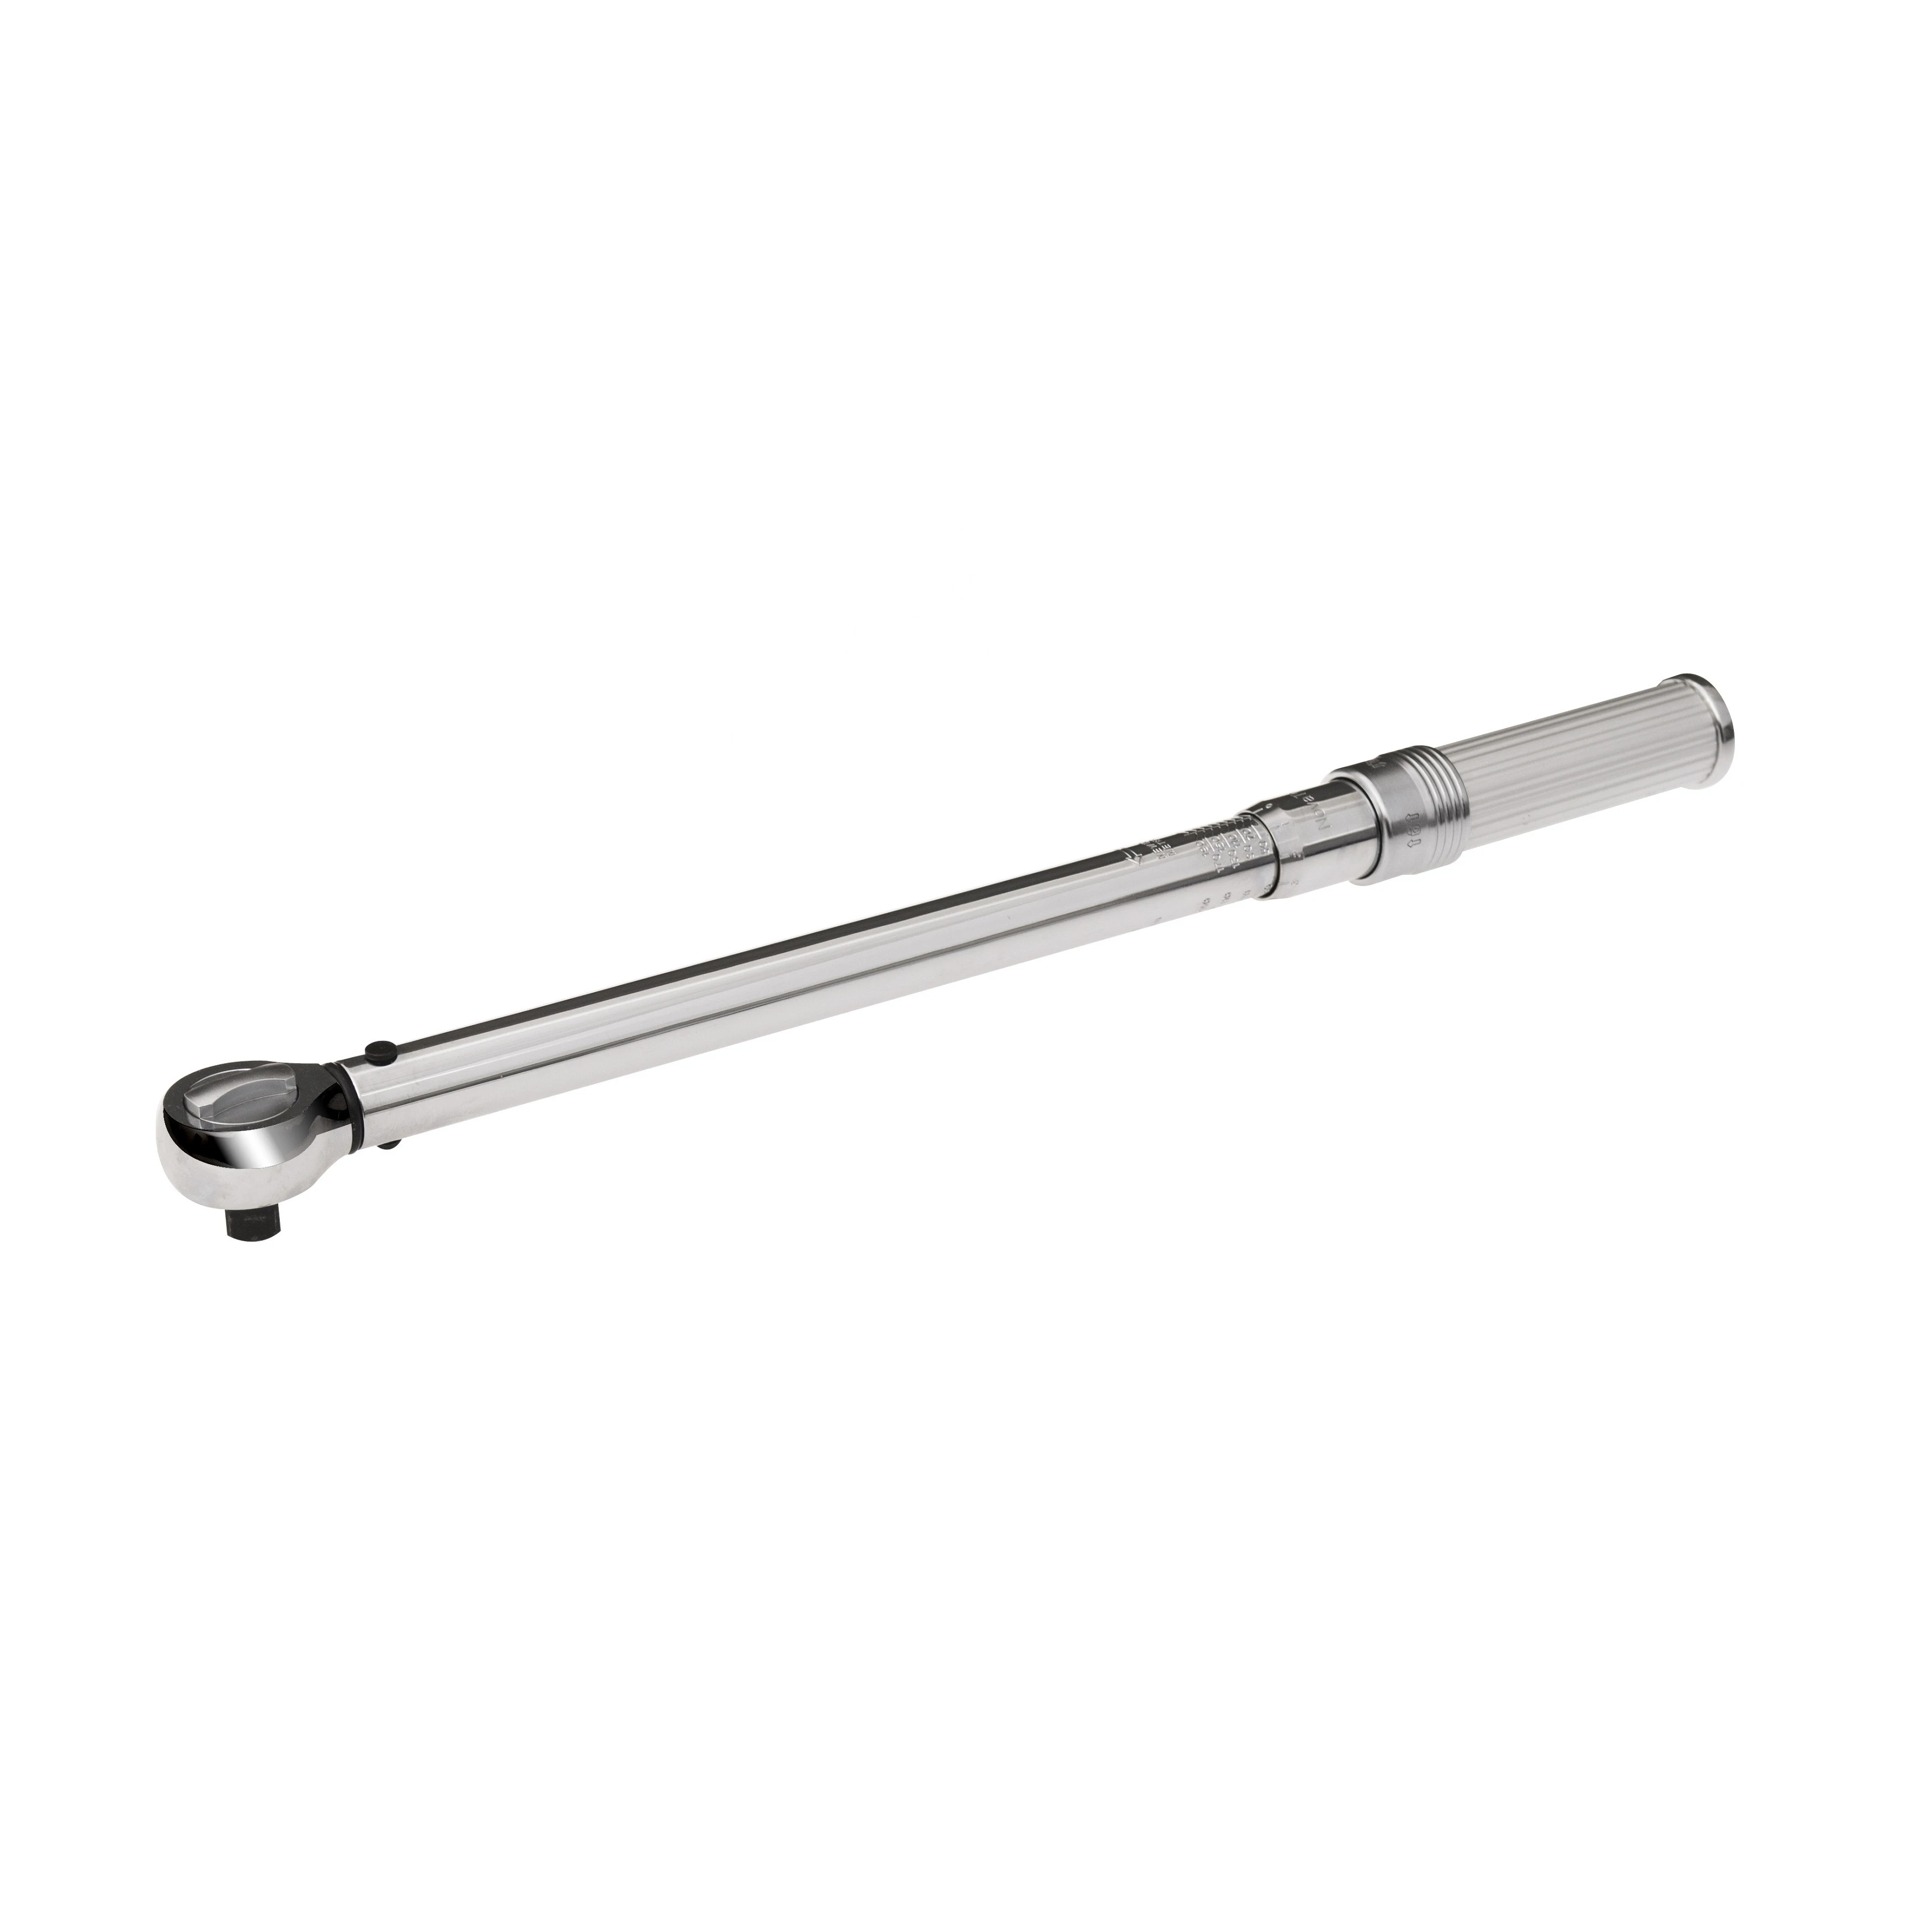 NovaTork All Metal Micrometer Torque Wrench With Ratchet Head / Head Holder, Flexible Ratchet End Fitting, Spanner, Manufacturer